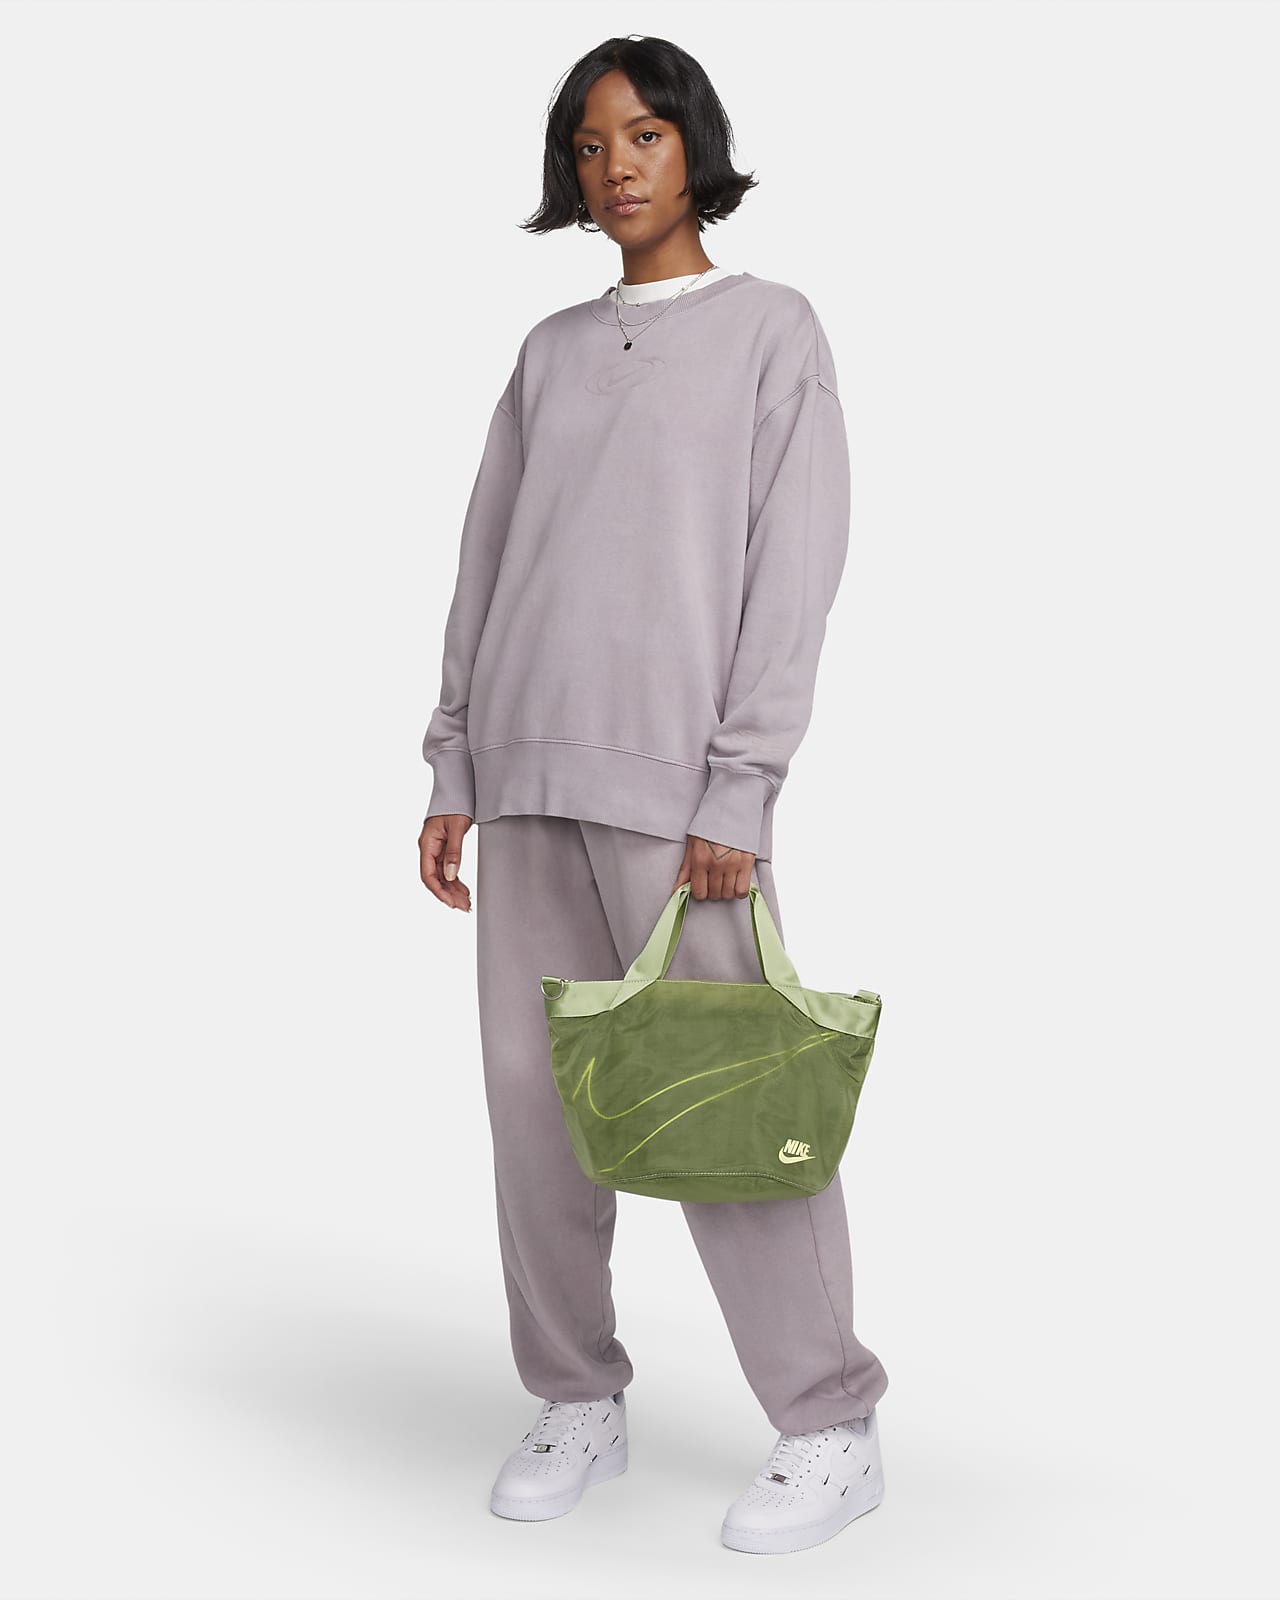  Nike Sportswear Futura Luxe Women's Tote Purse Bag